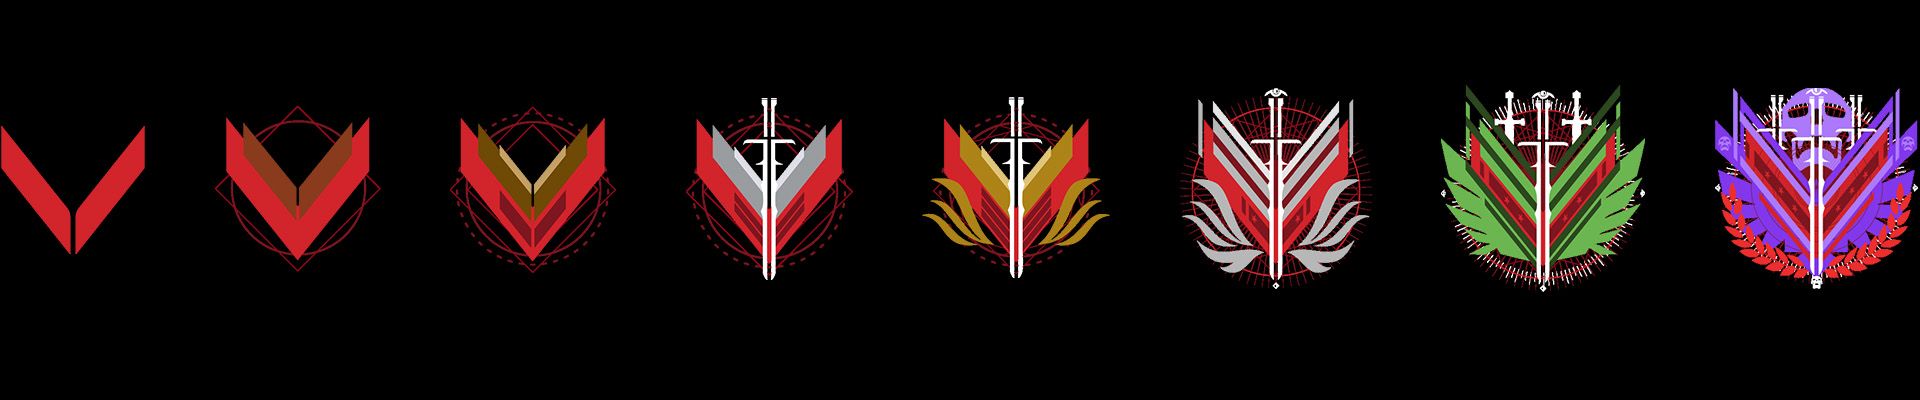 Destiny 2 PvP Glory Division Rank Icons